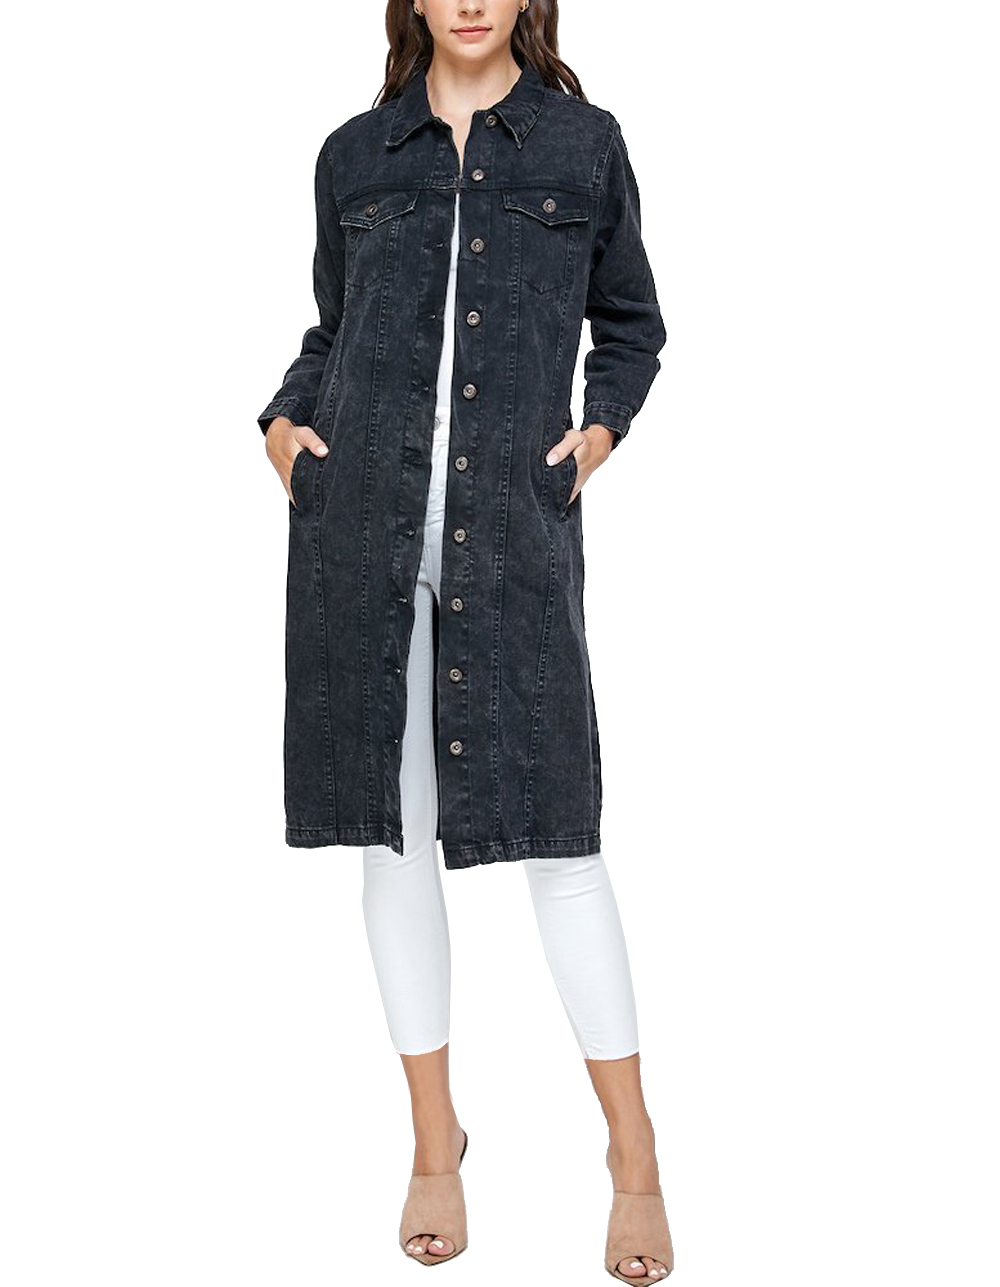 Women's Long Casual Maxi Length Denim Cotton Coat Oversize Button Up Jean Jacket (Mineral Black, S) - image 1 of 6